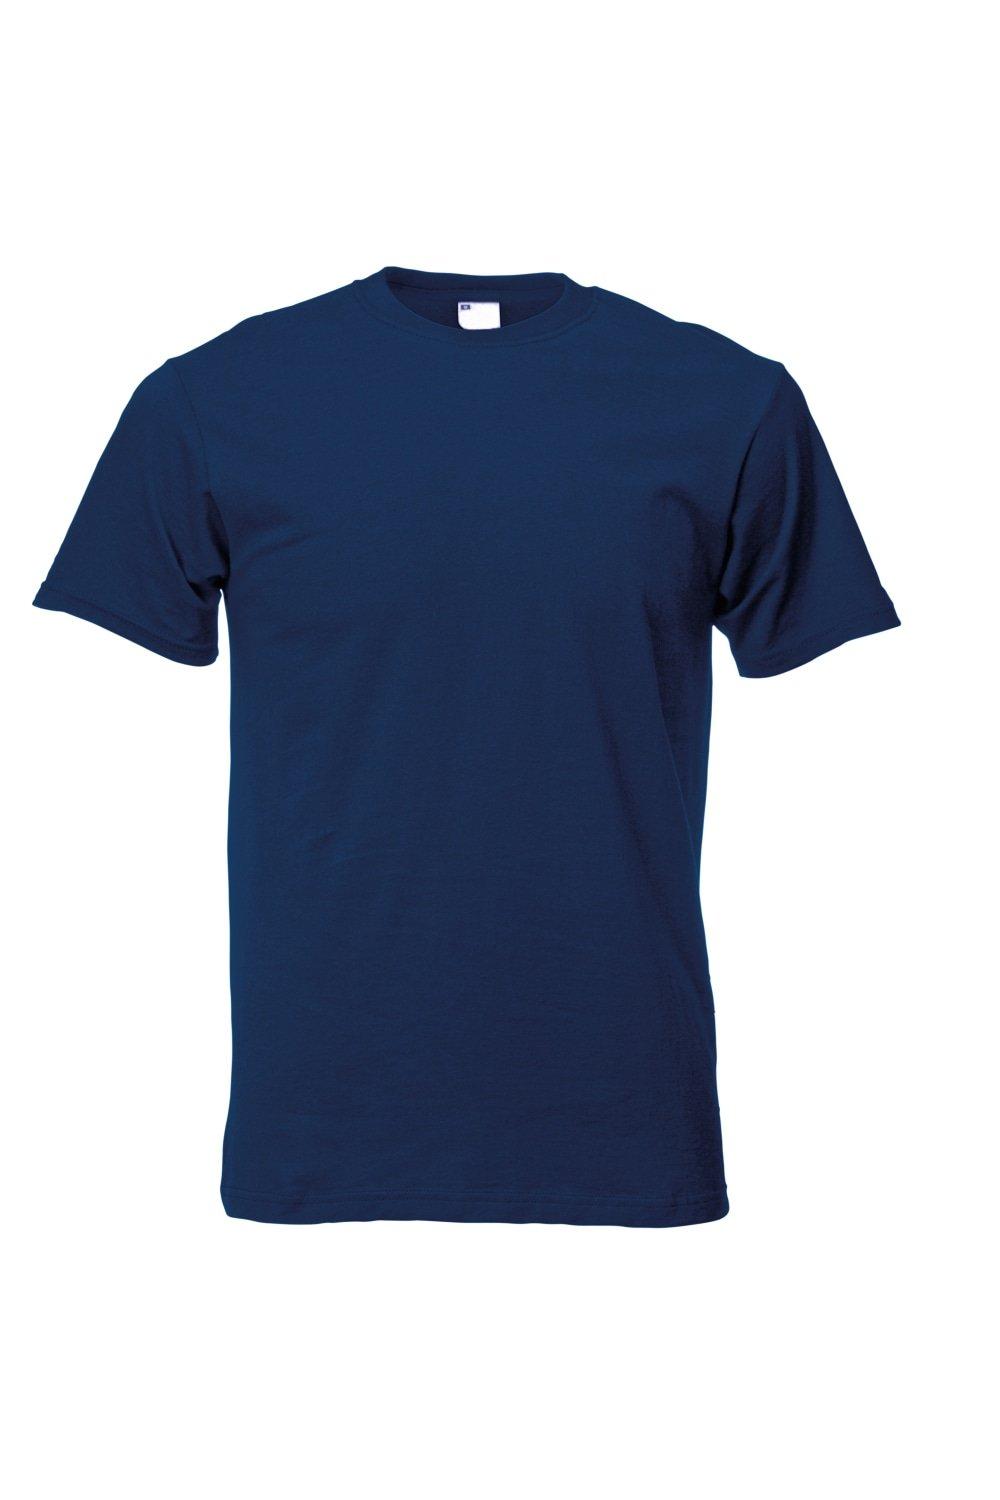 Повседневная футболка с коротким рукавом Universal Textiles, темно-синий мужская футболка ретро кассета 2xl серый меланж